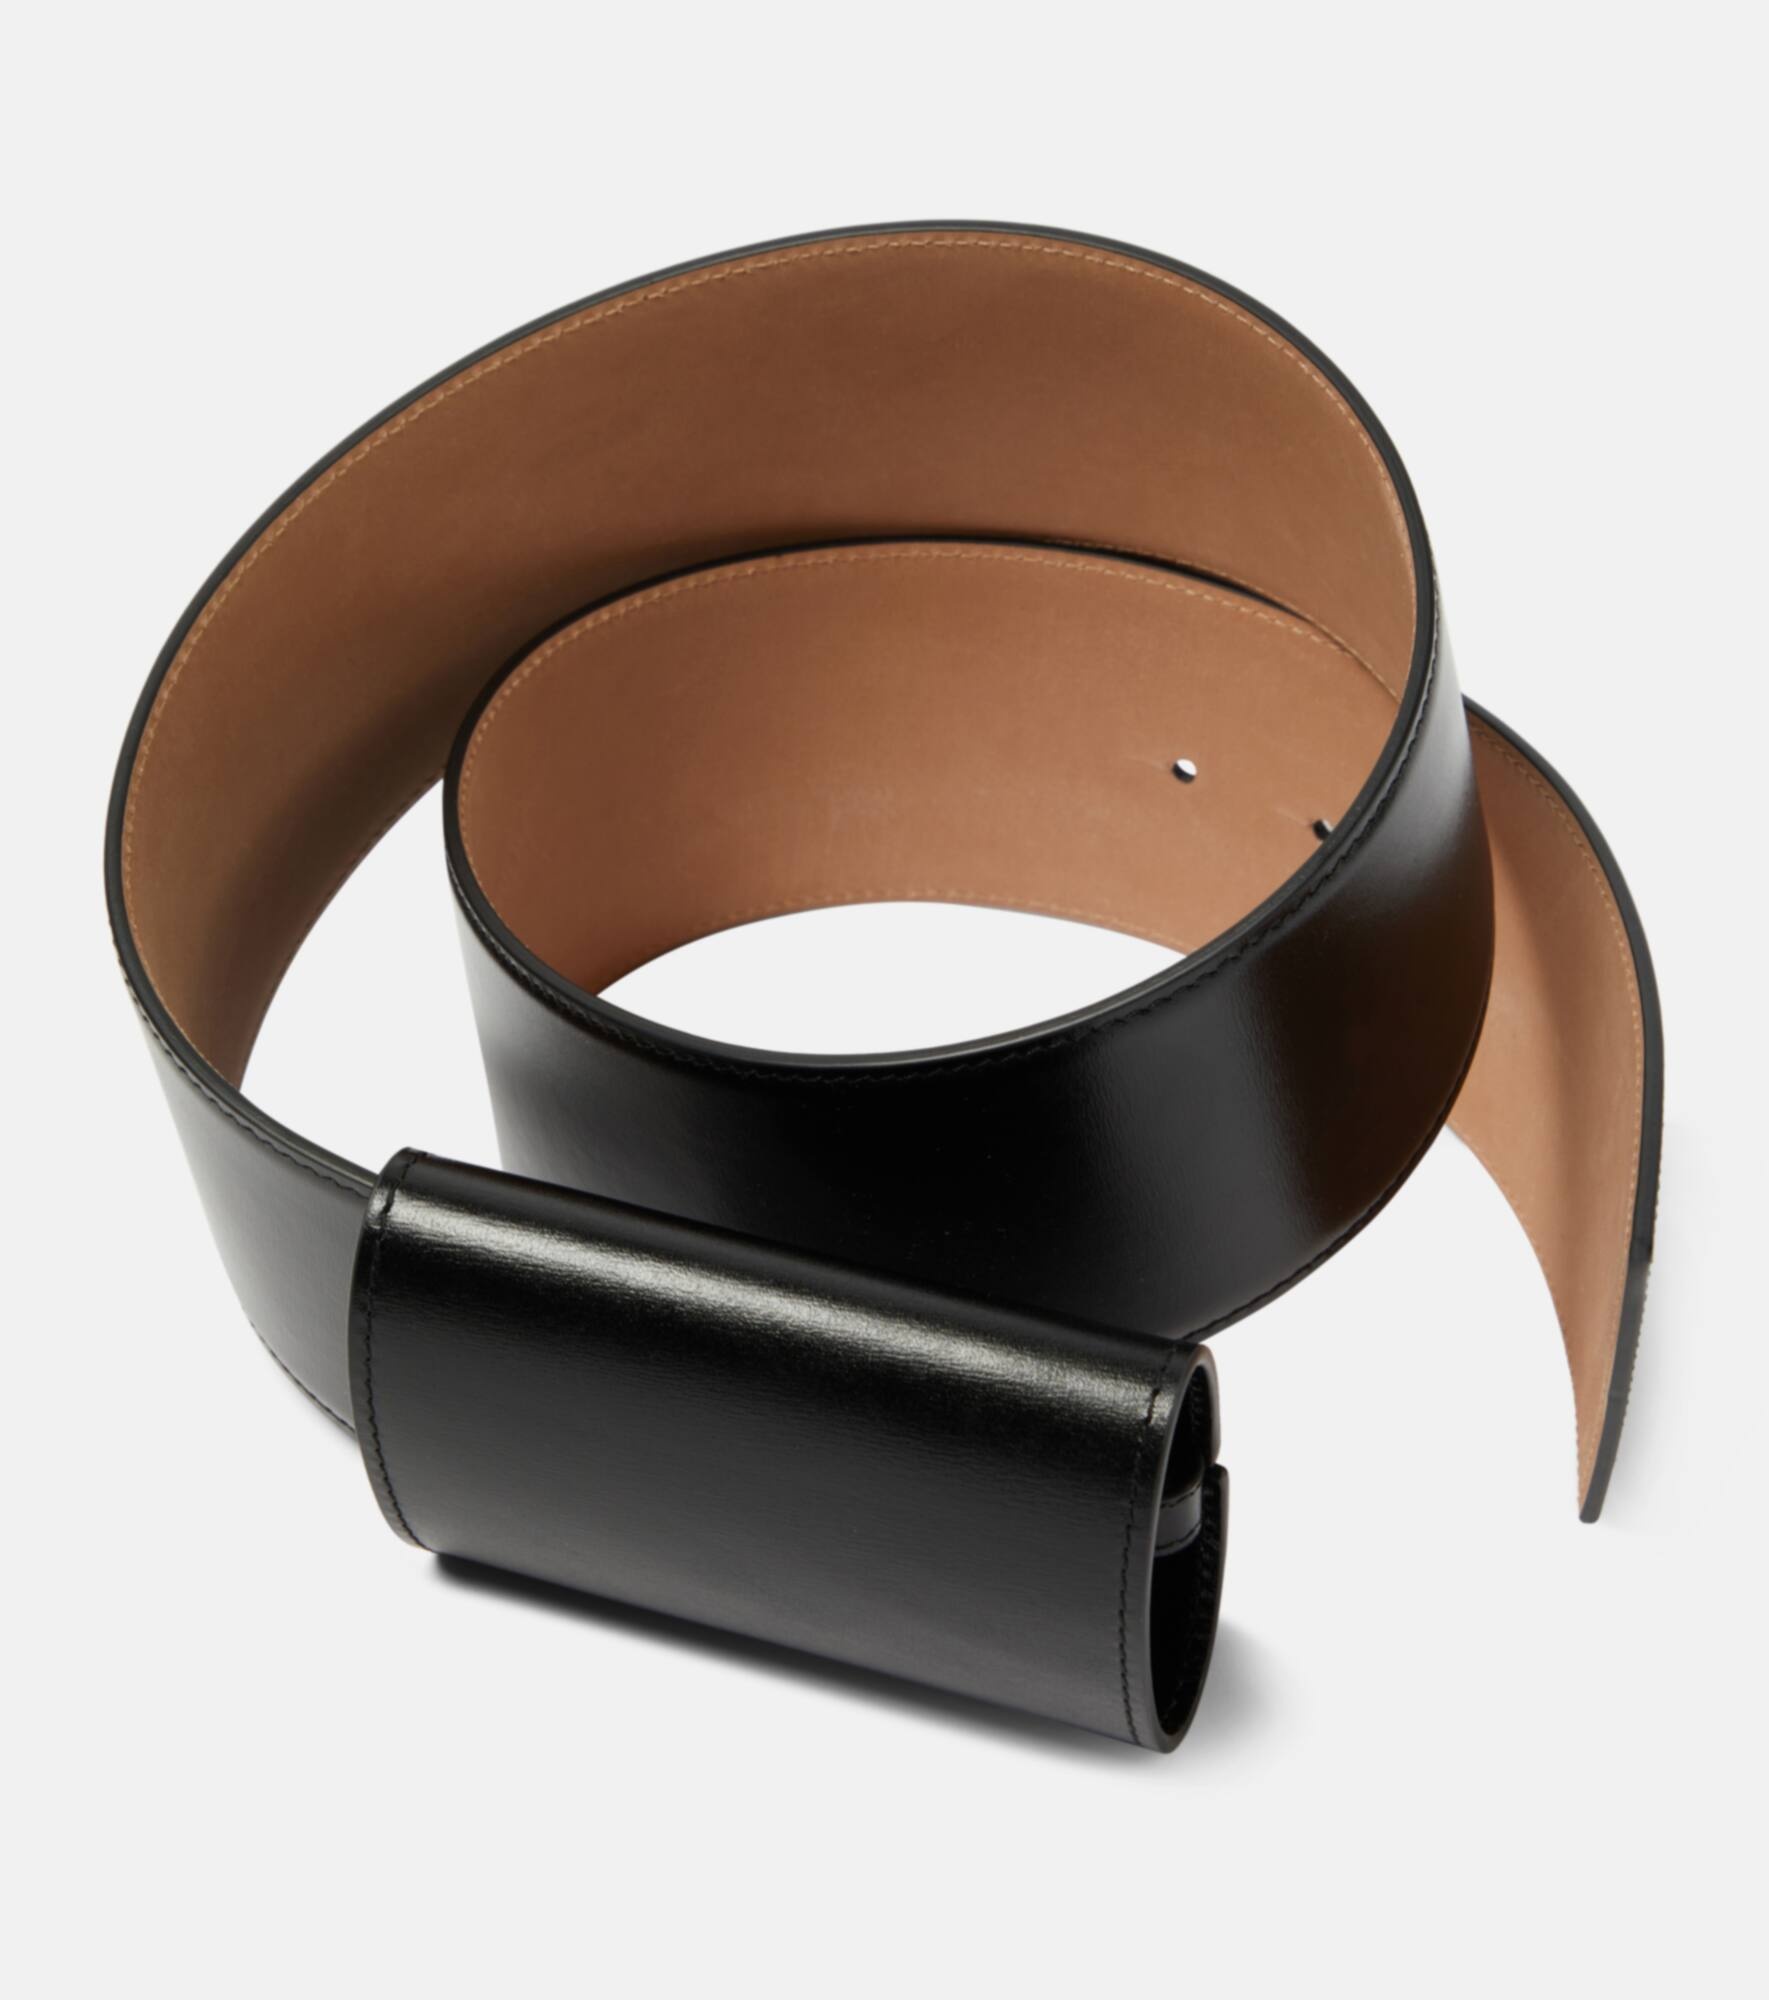 Knot leather belt - 3